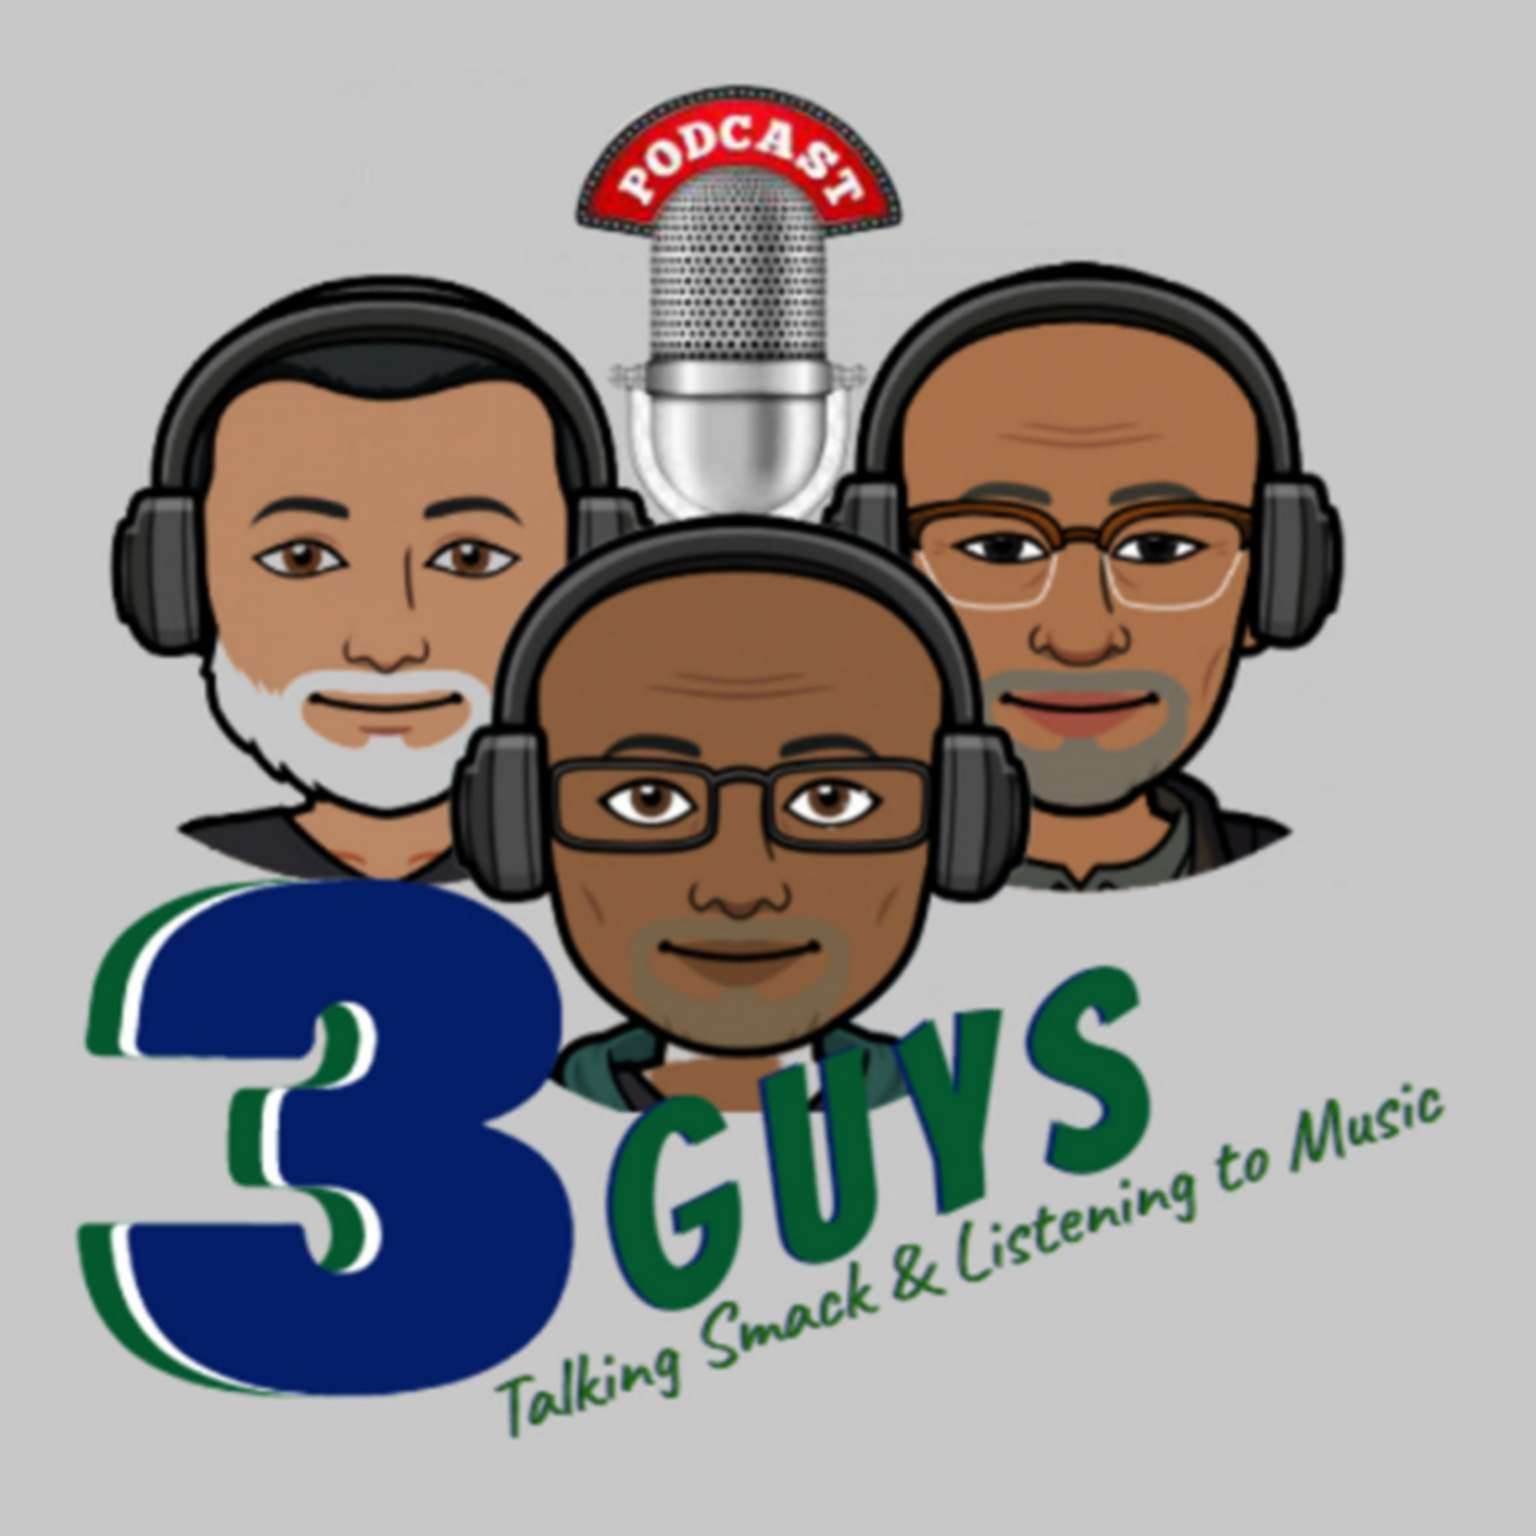 3 Guys Talking Smack & Listening To Music